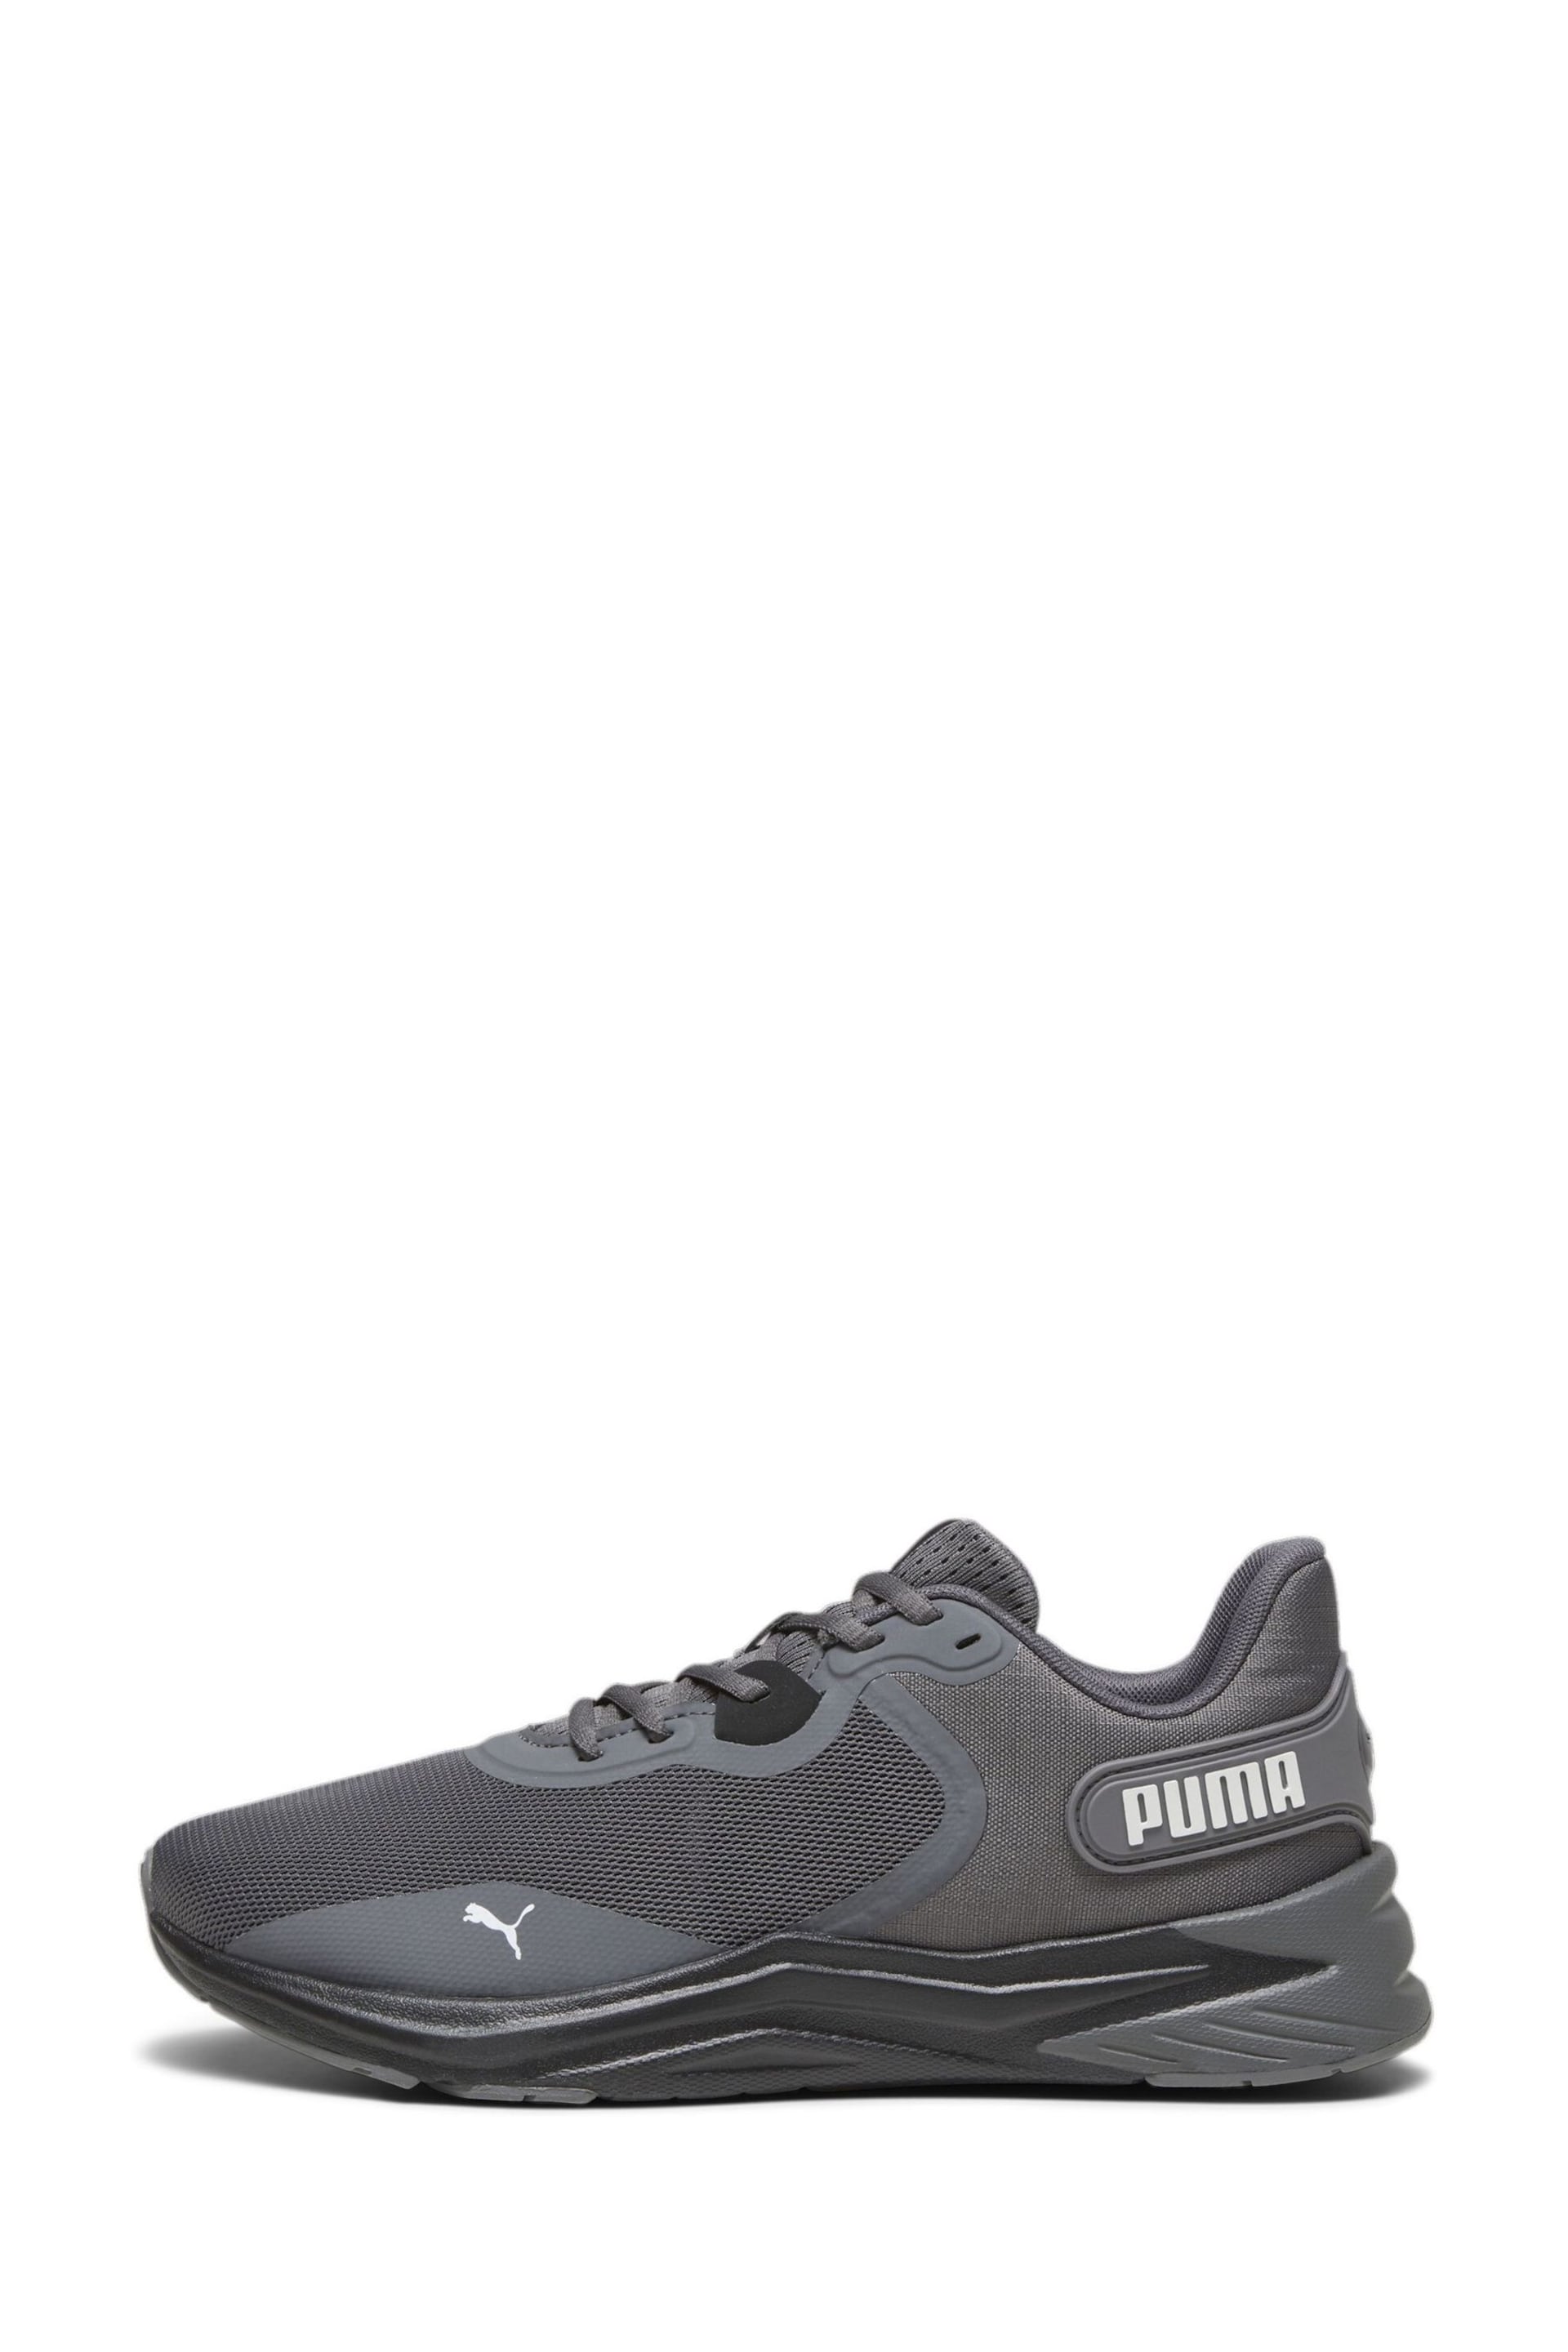 Puma Grey Chrome Disperse XT 3 Training Shoes - Image 1 of 7